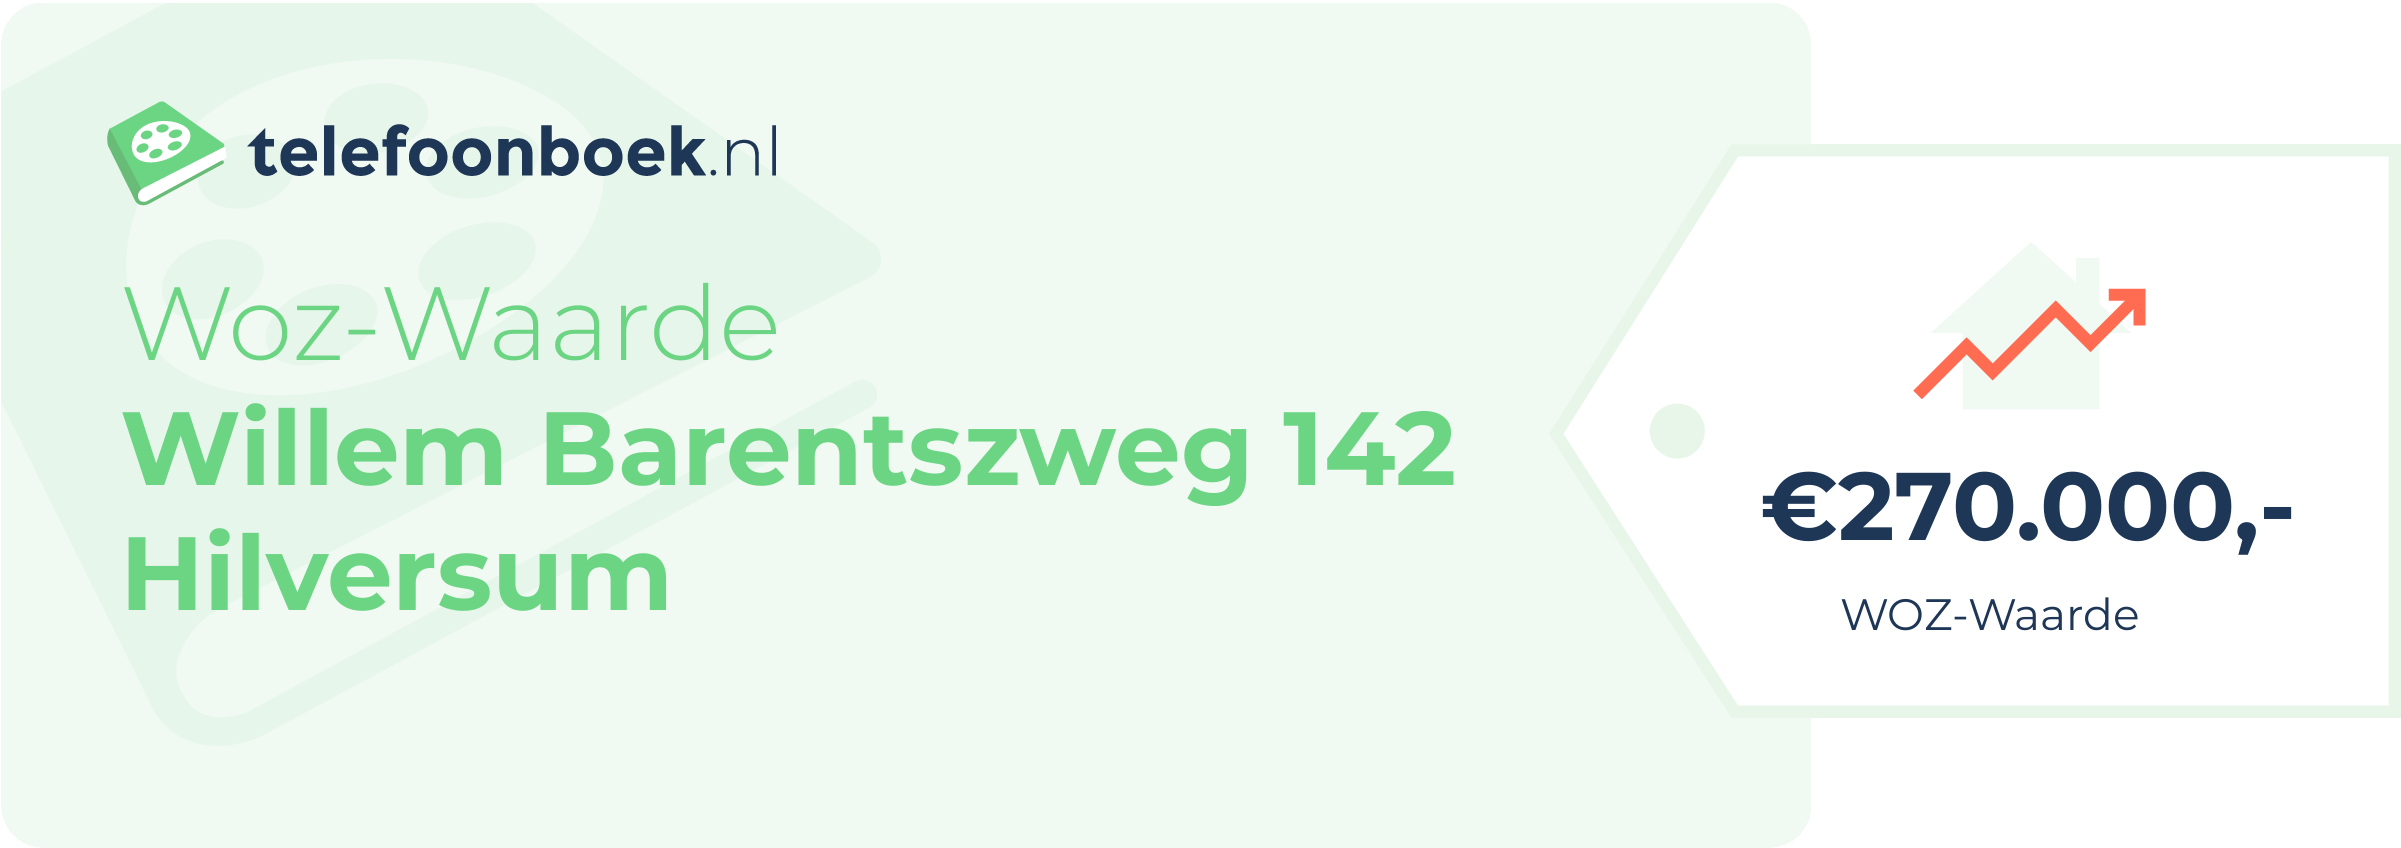 WOZ-waarde Willem Barentszweg 142 Hilversum